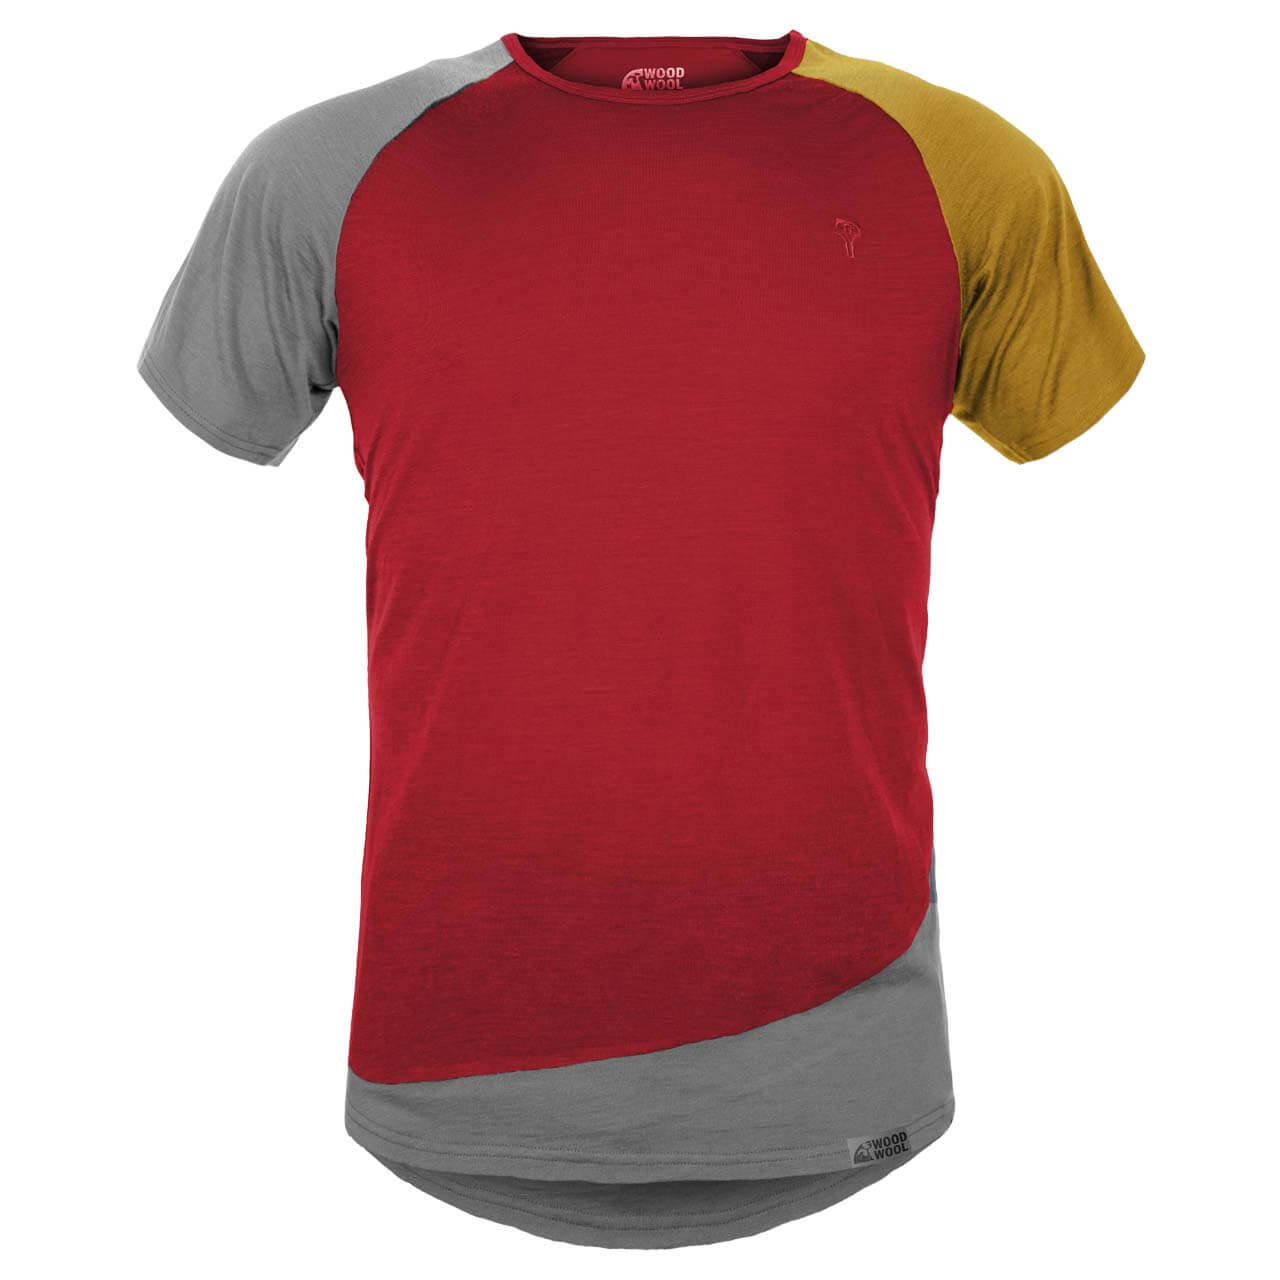 Grüezi Bag WoodWool T-Shirt Mr. Kirk - Fired Red Brick, XL von Grüezi Bag}